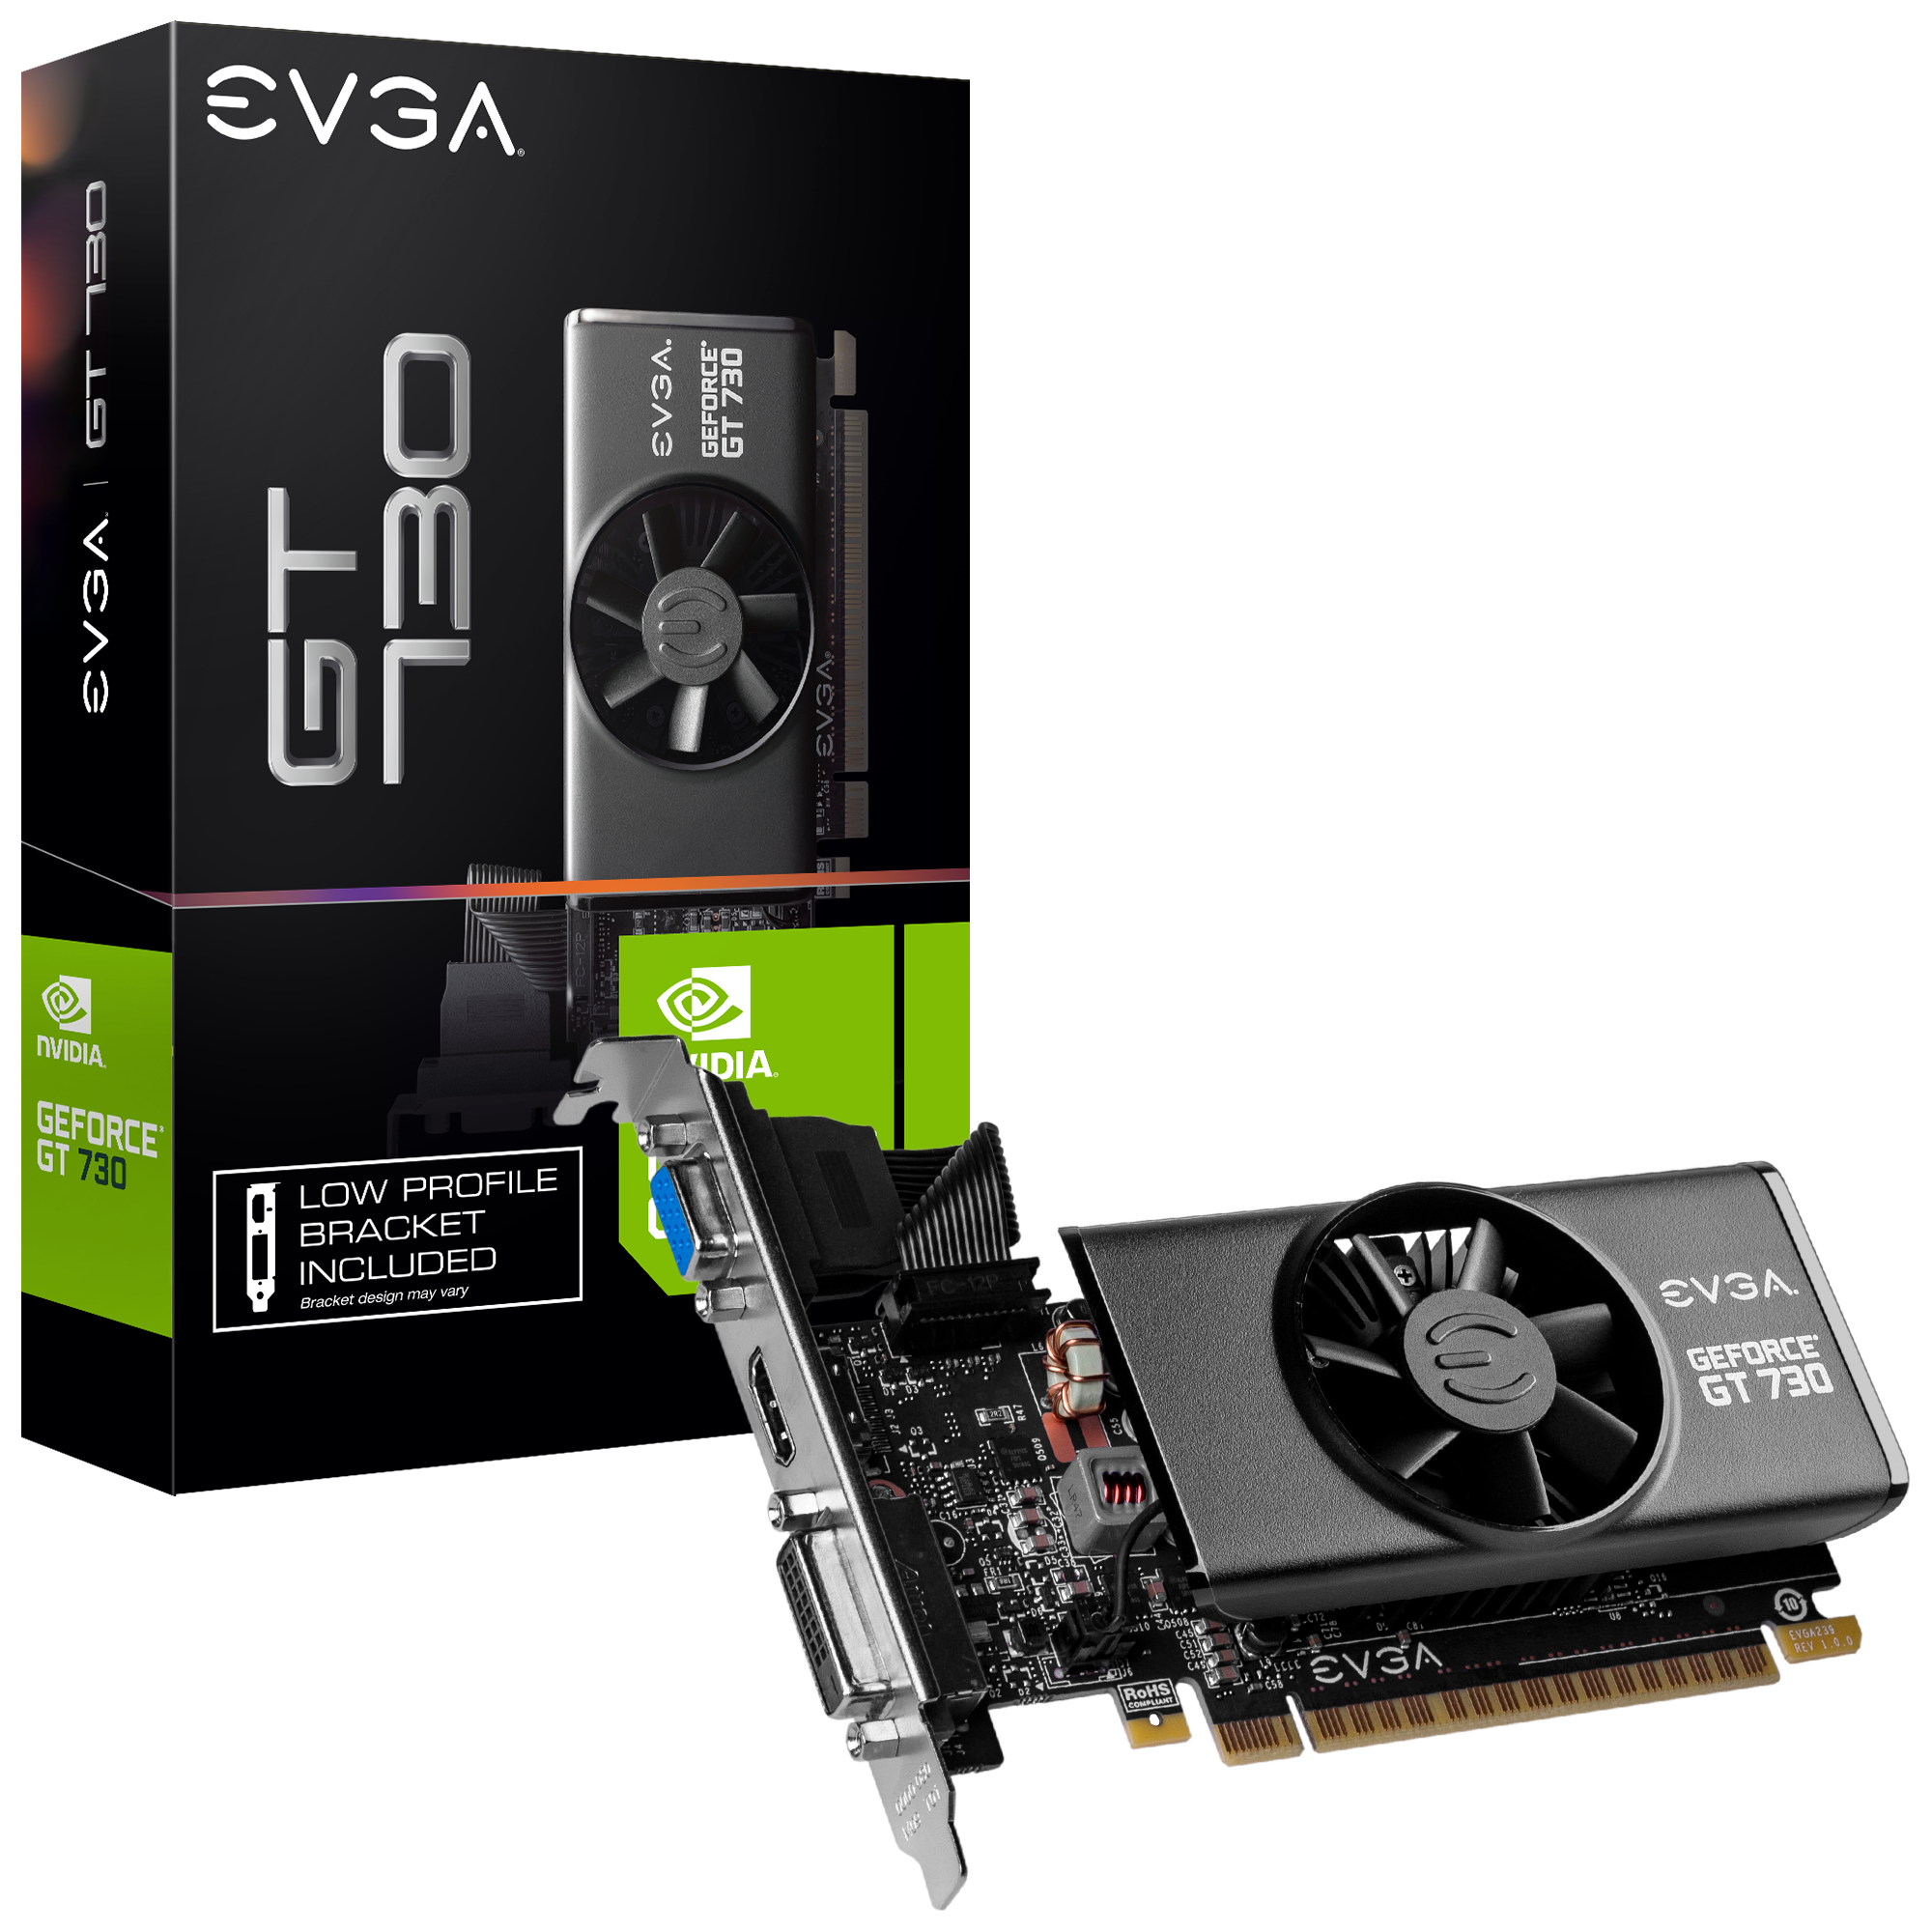 Chap deficiency bridge EVGA - Products - EVGA GeForce GT 730 2GB (Low Profile) - 02G-P3-3733-KR